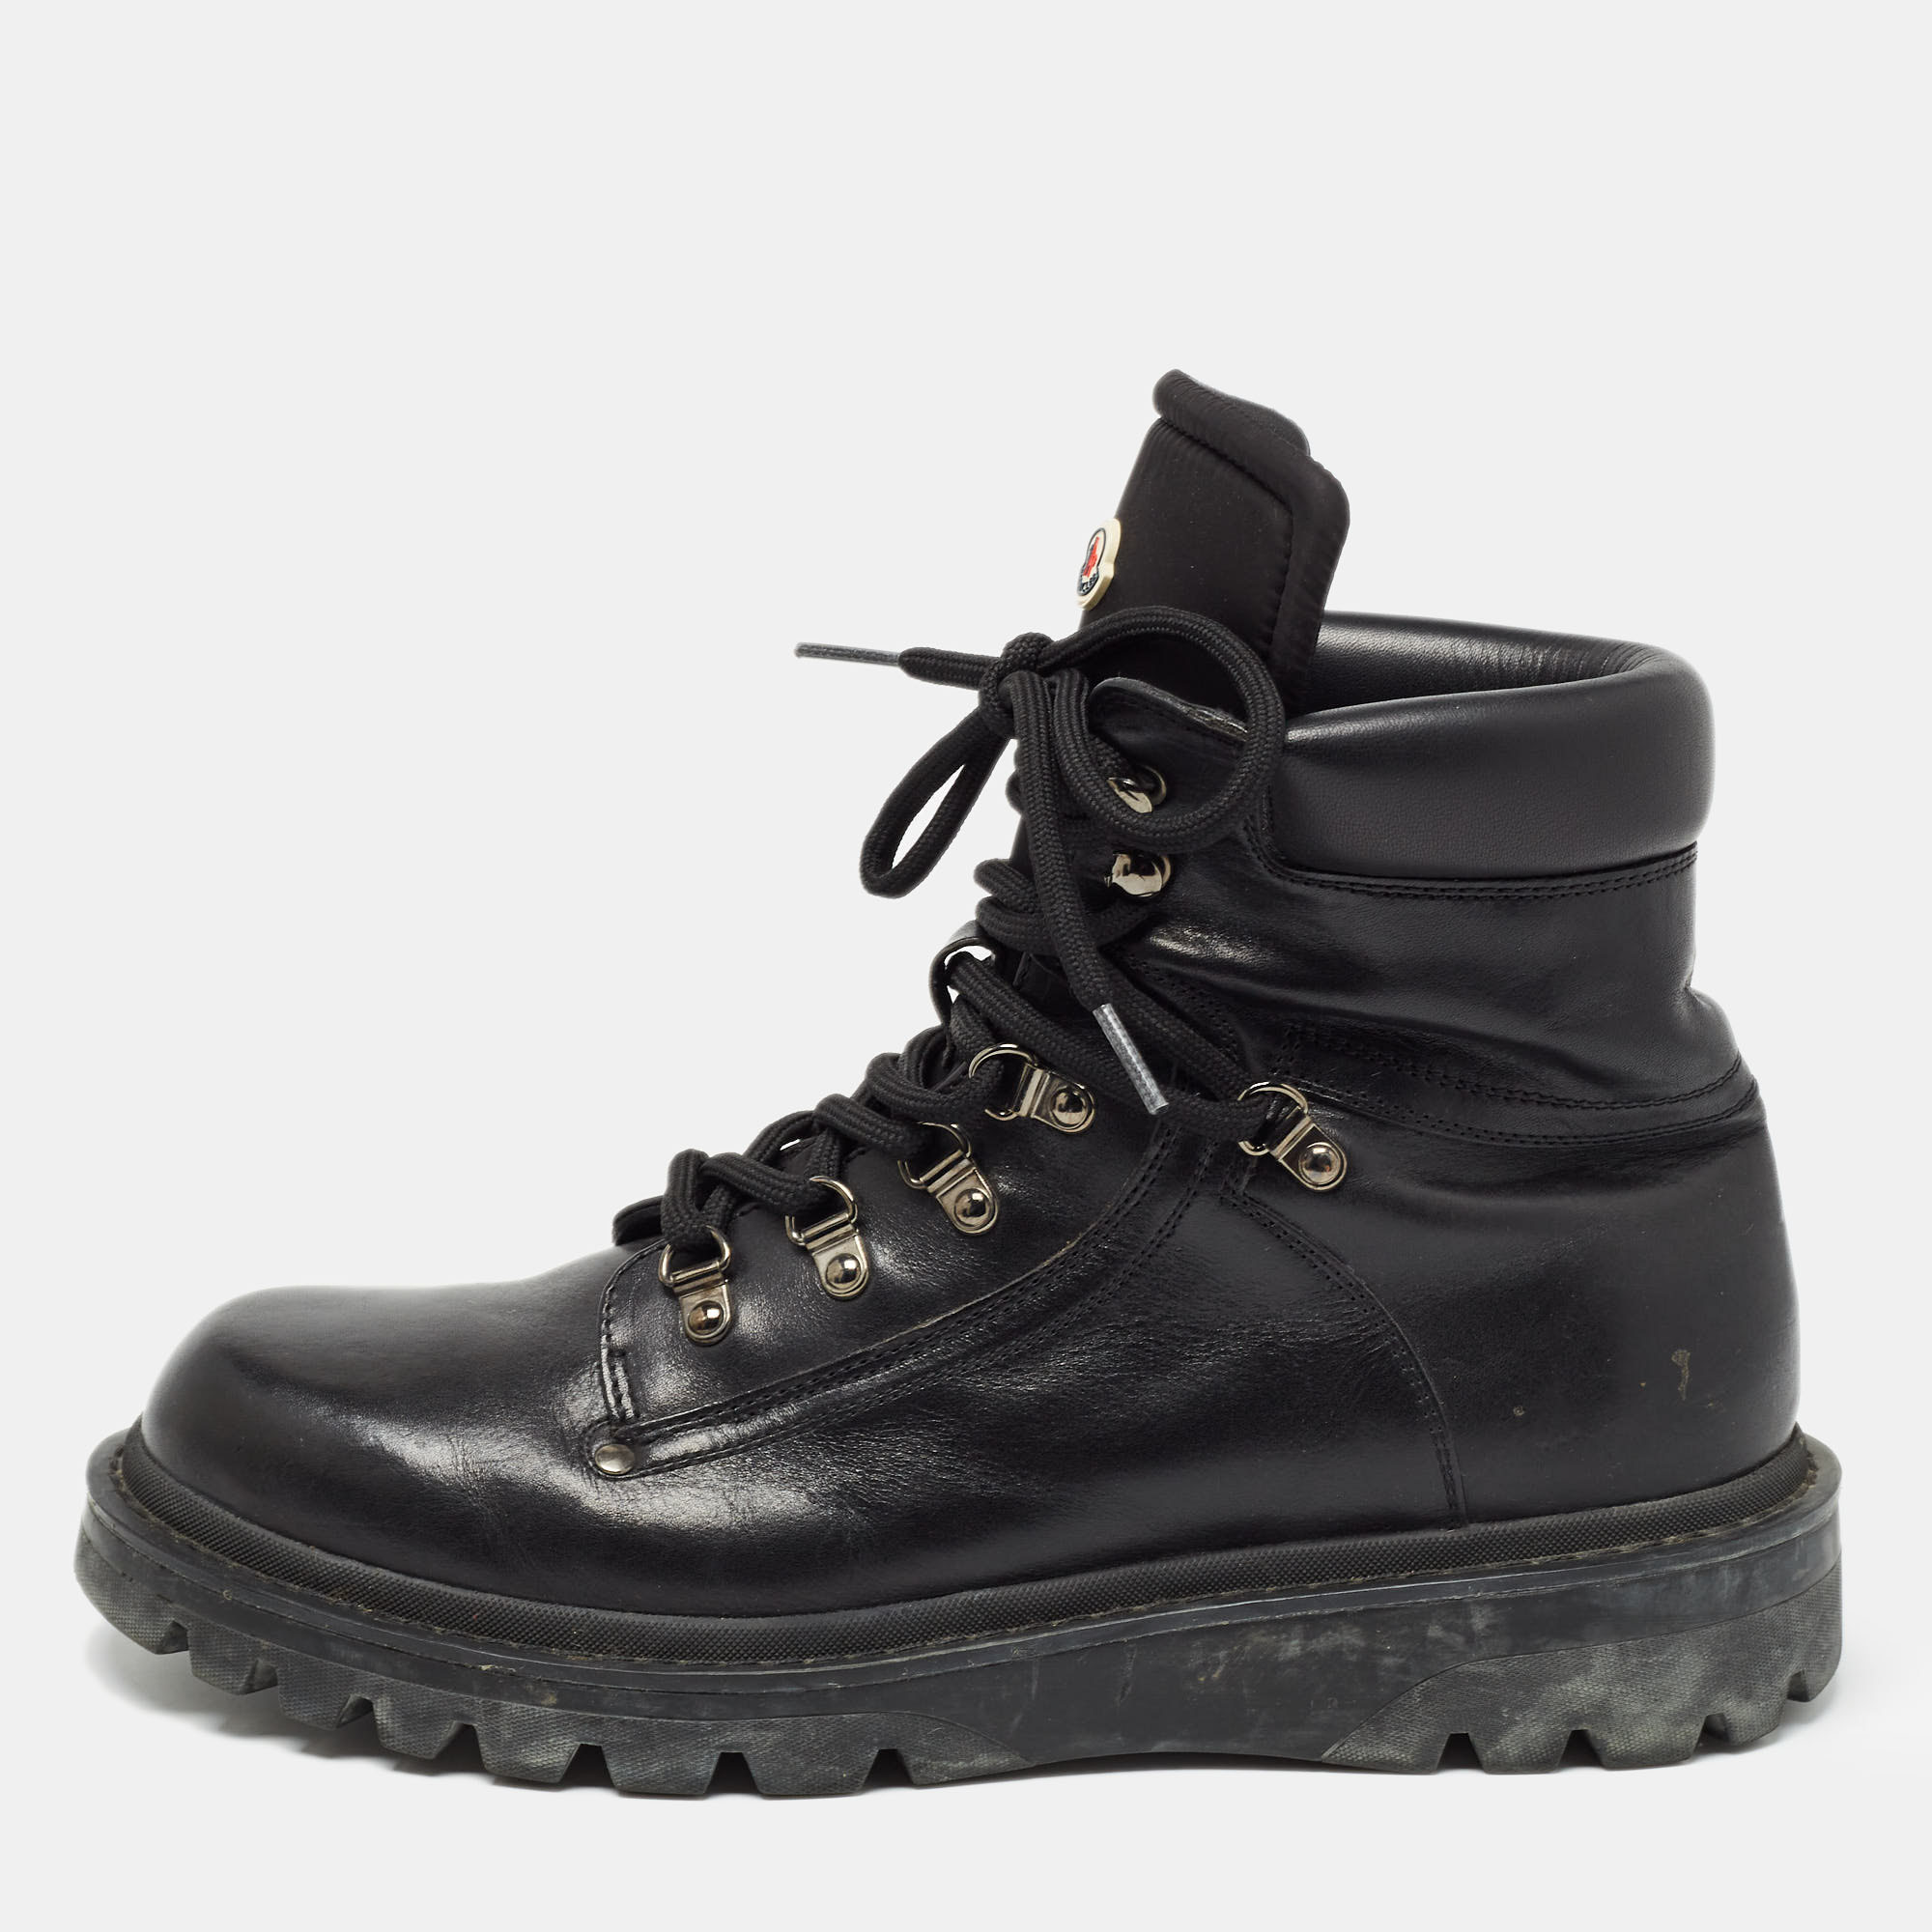 Moncler black lace up ankle boots size 42